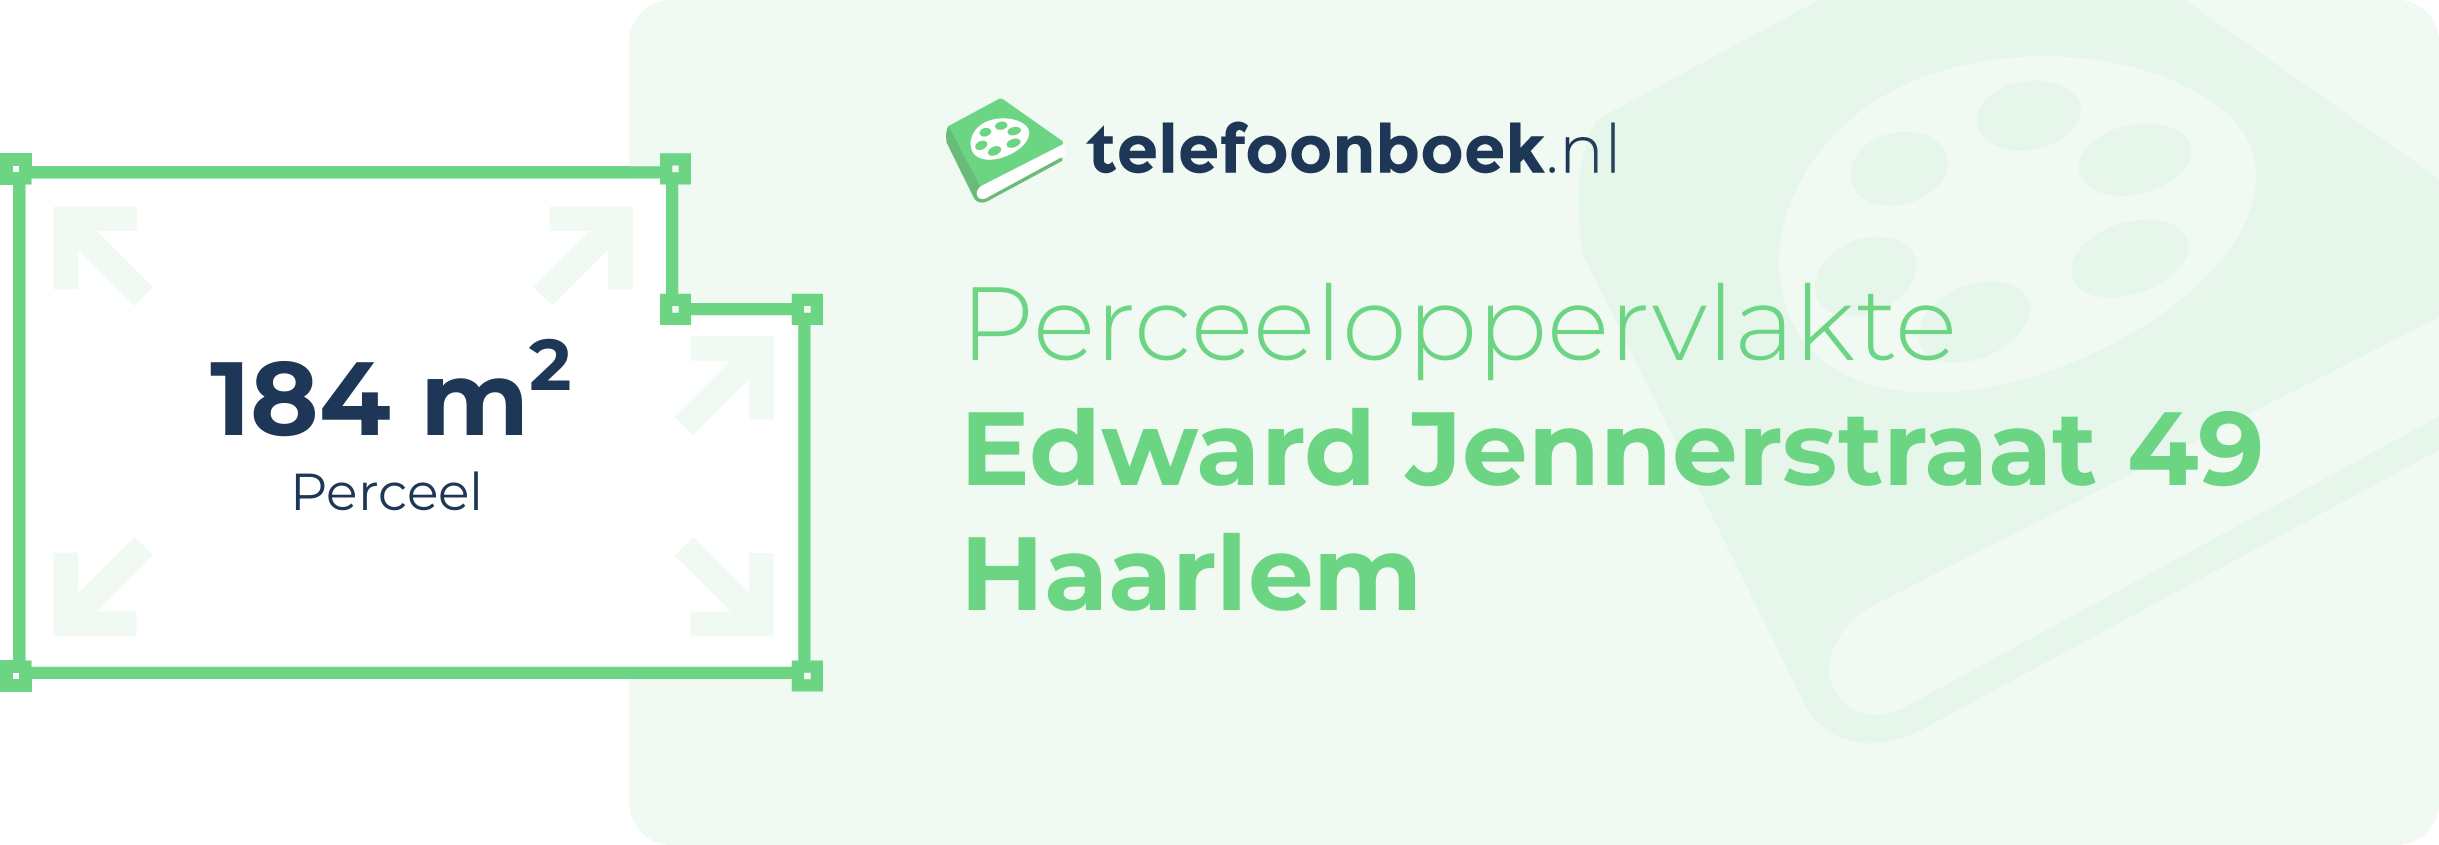 Perceeloppervlakte Edward Jennerstraat 49 Haarlem